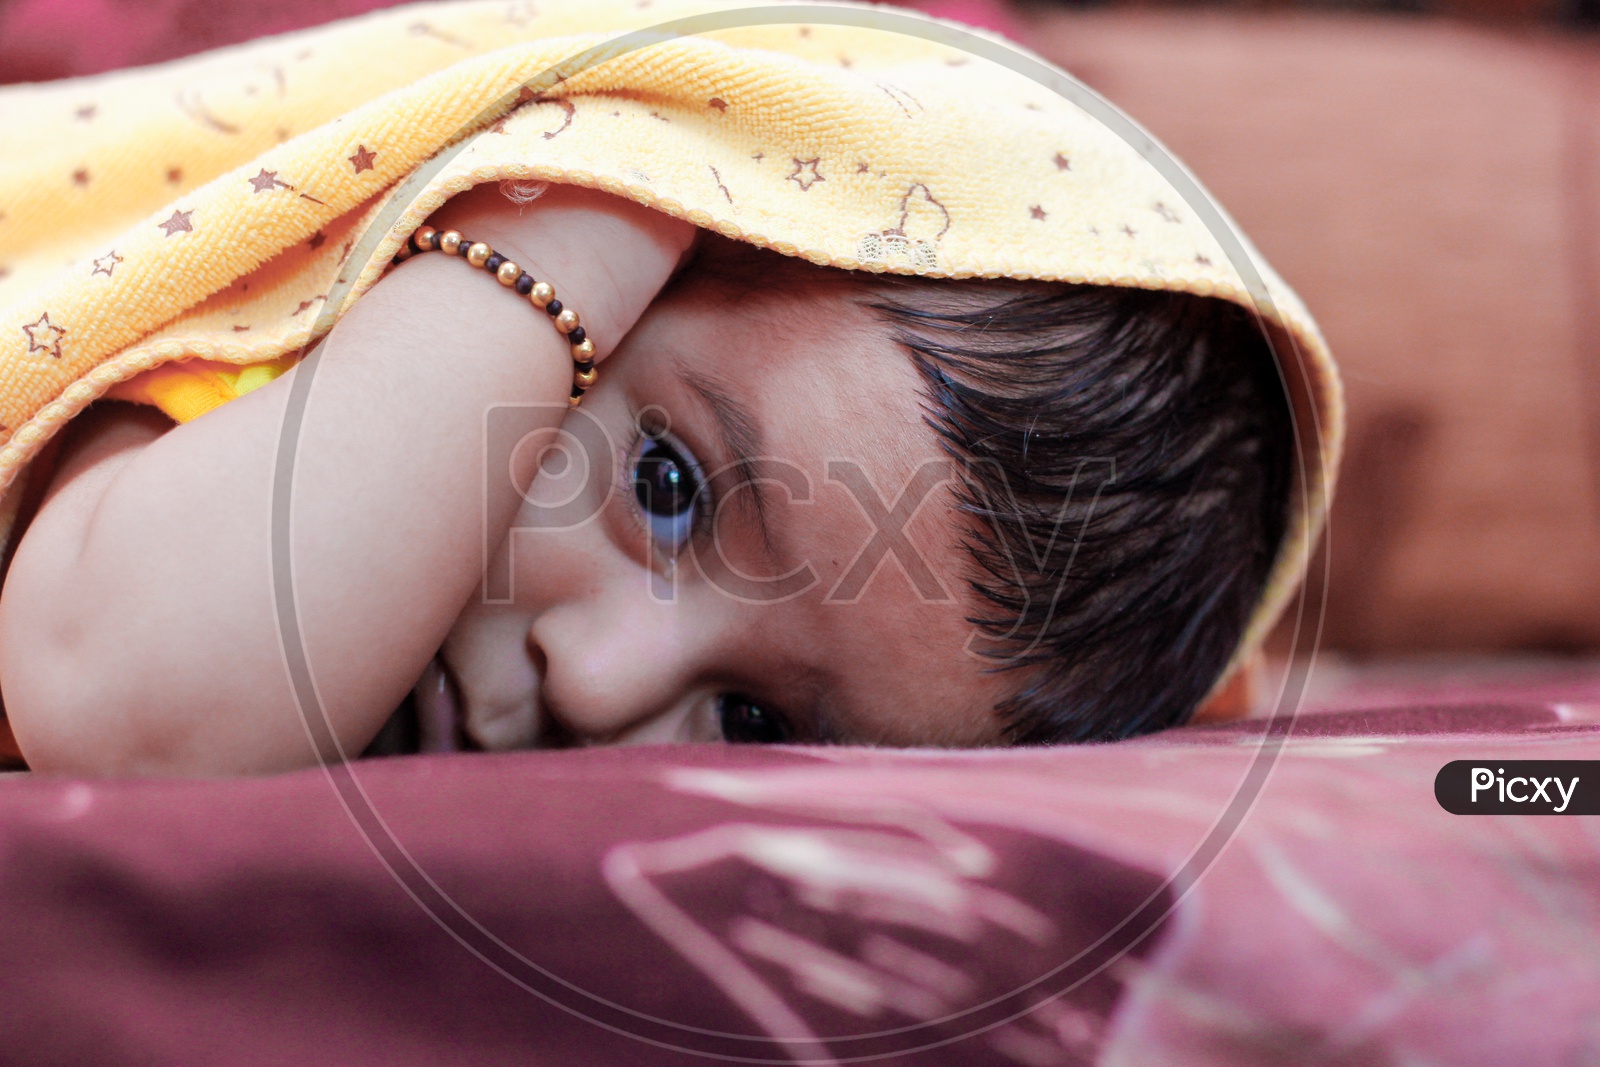 Indian Baby Cute Closeup Shots in Home